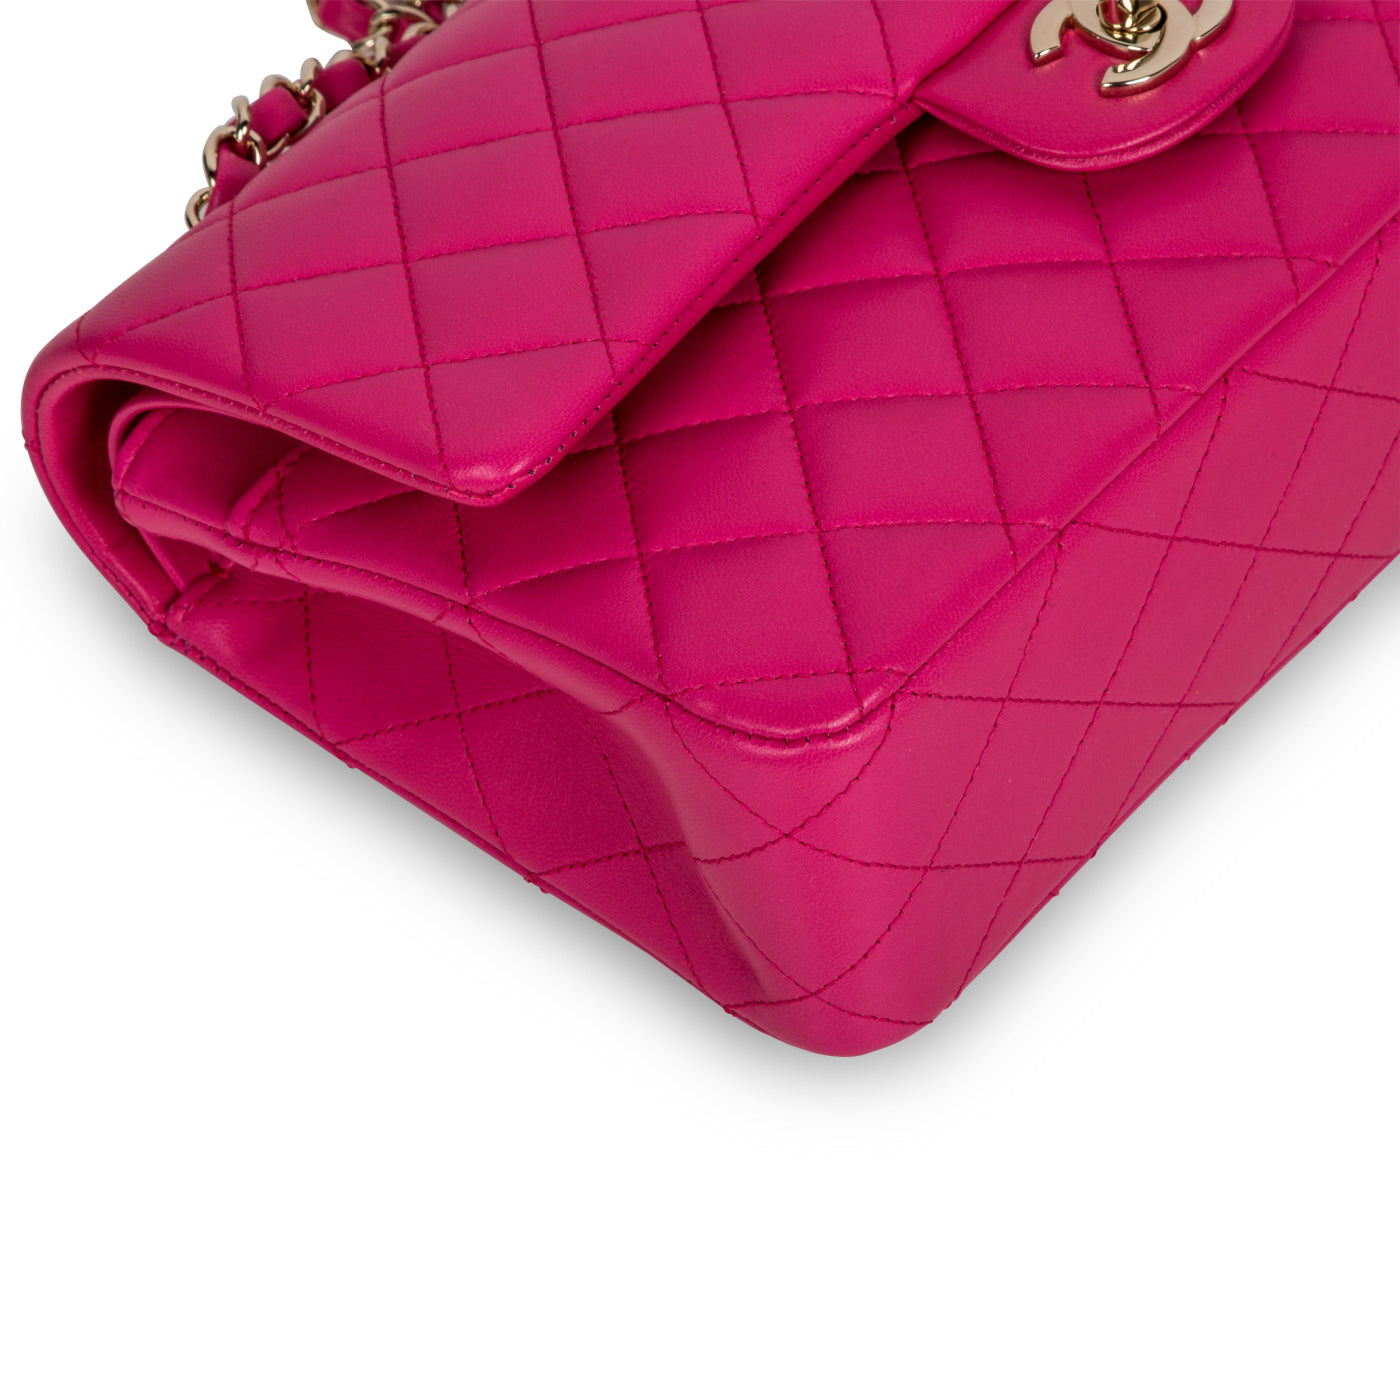 Chanel - Classic Flap Bag - Medium - Hot Pink Lambskin - CGHW